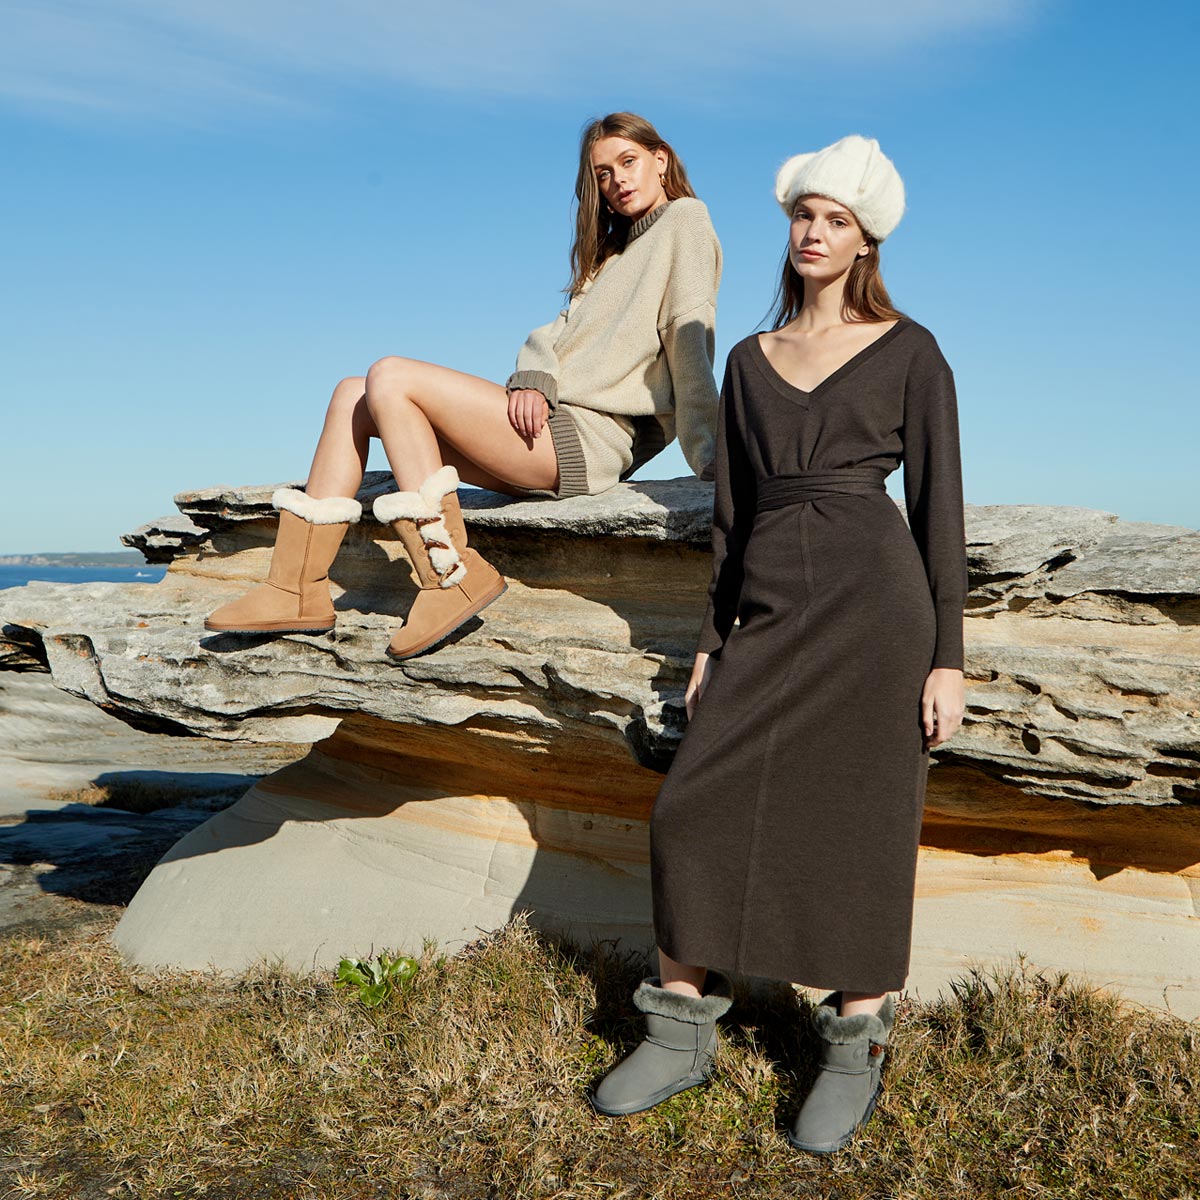 Sydney has amazing fashion models for UGG Boots